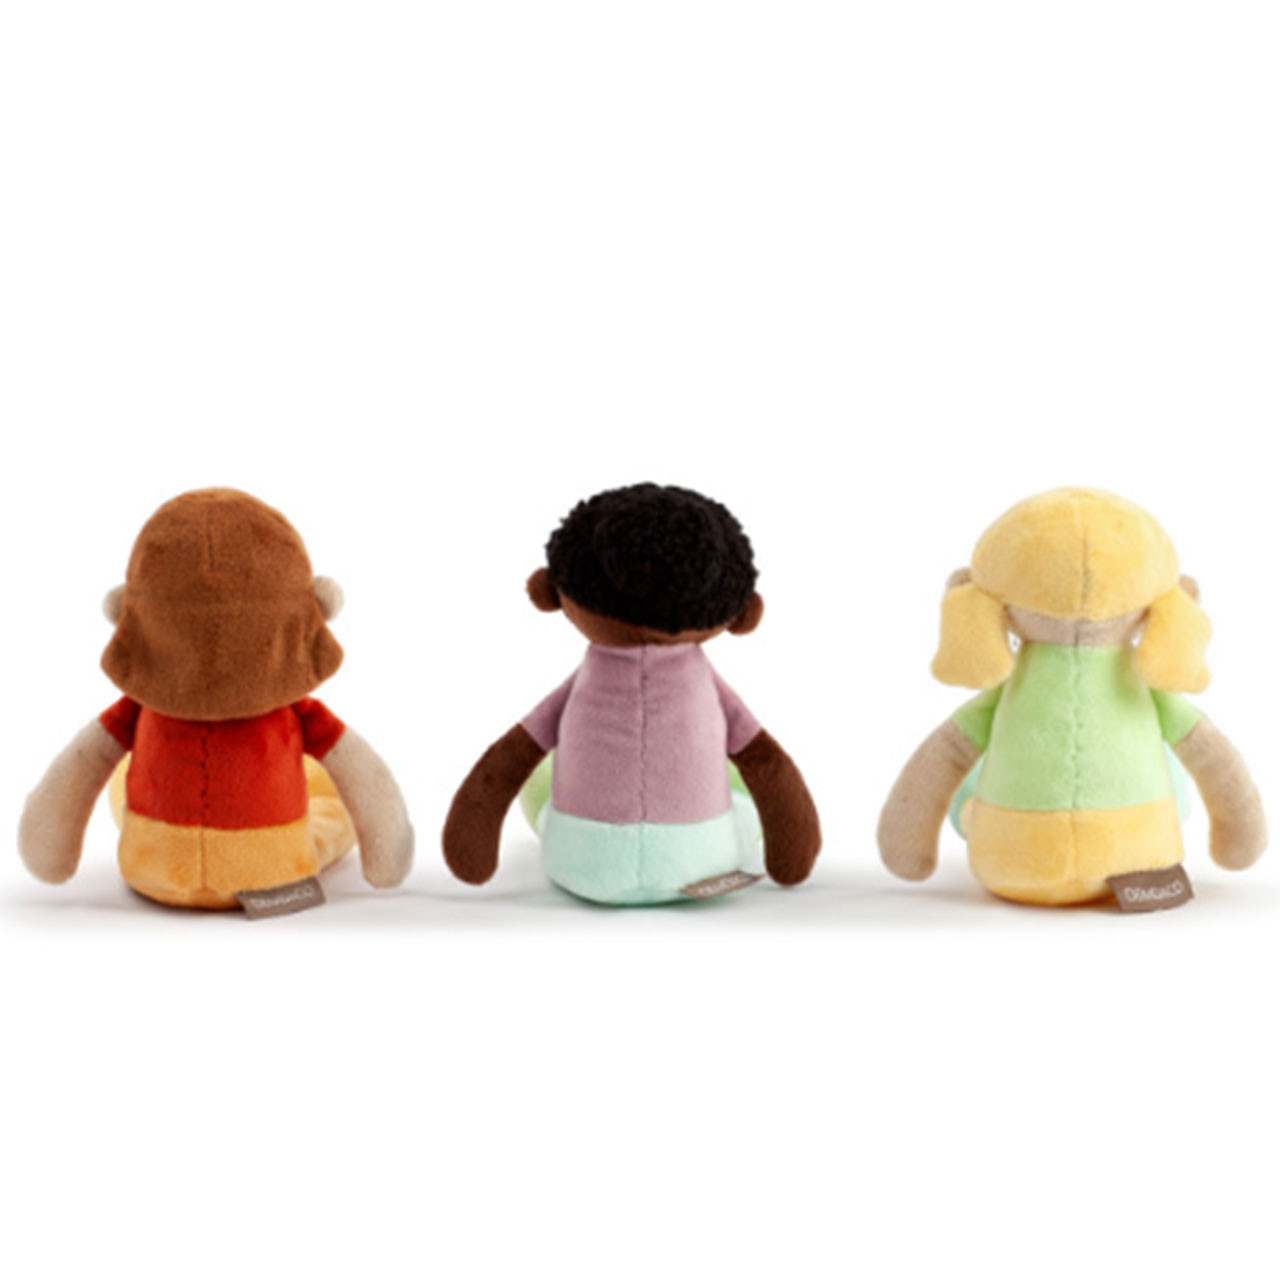 The back of each of the 3 Hopeful Rainbows Dolls